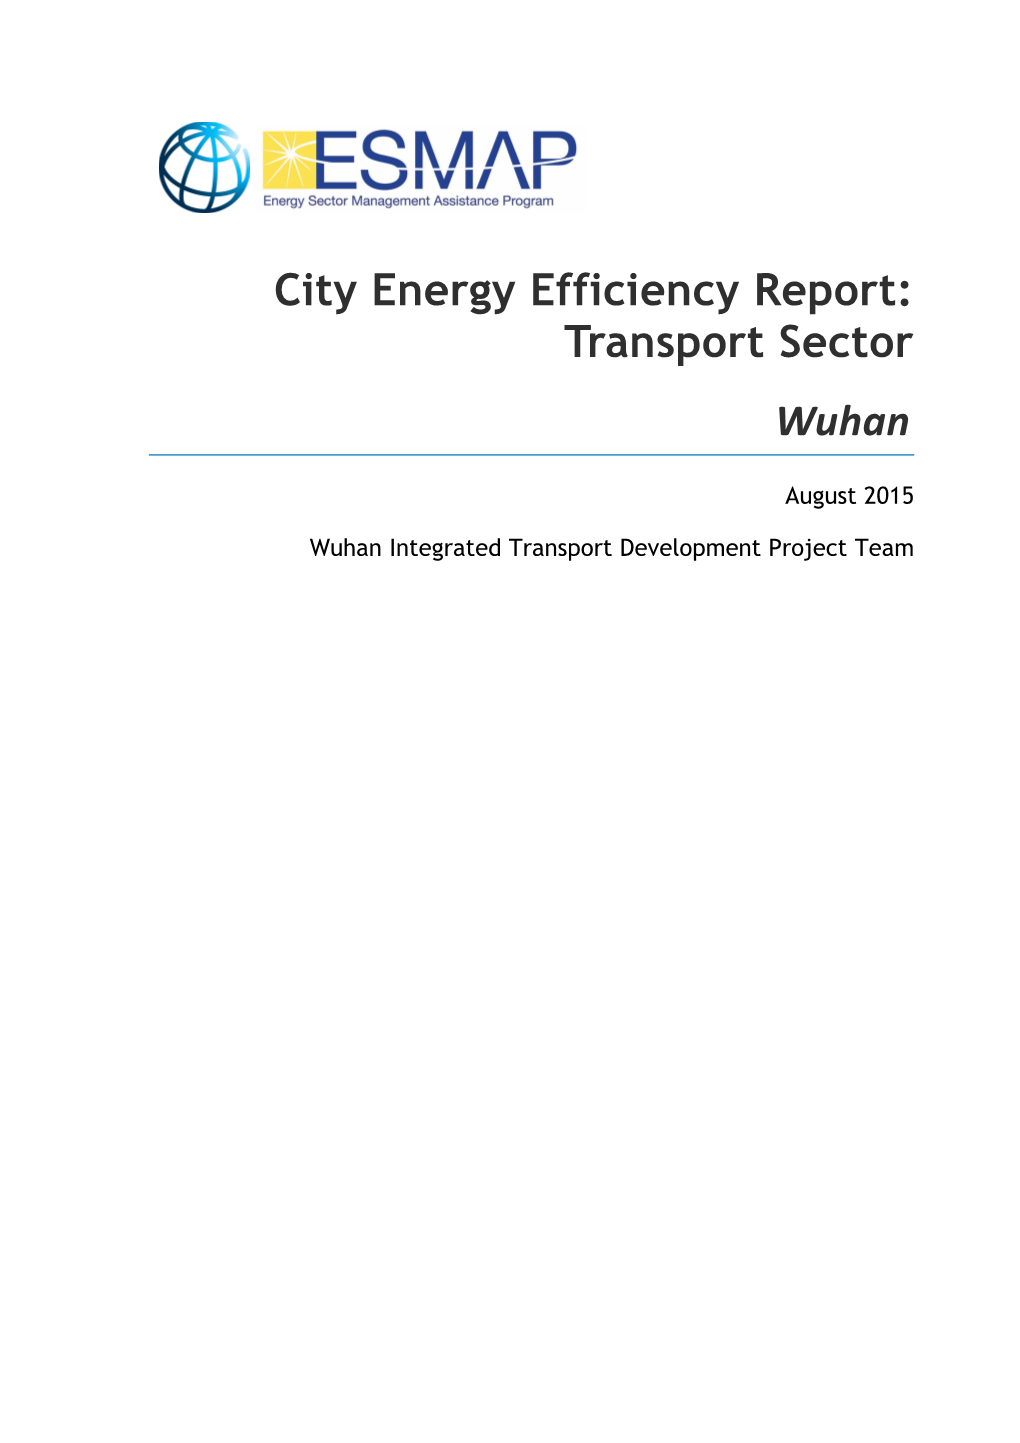 City Energy Efficiency Report: Transport Sector